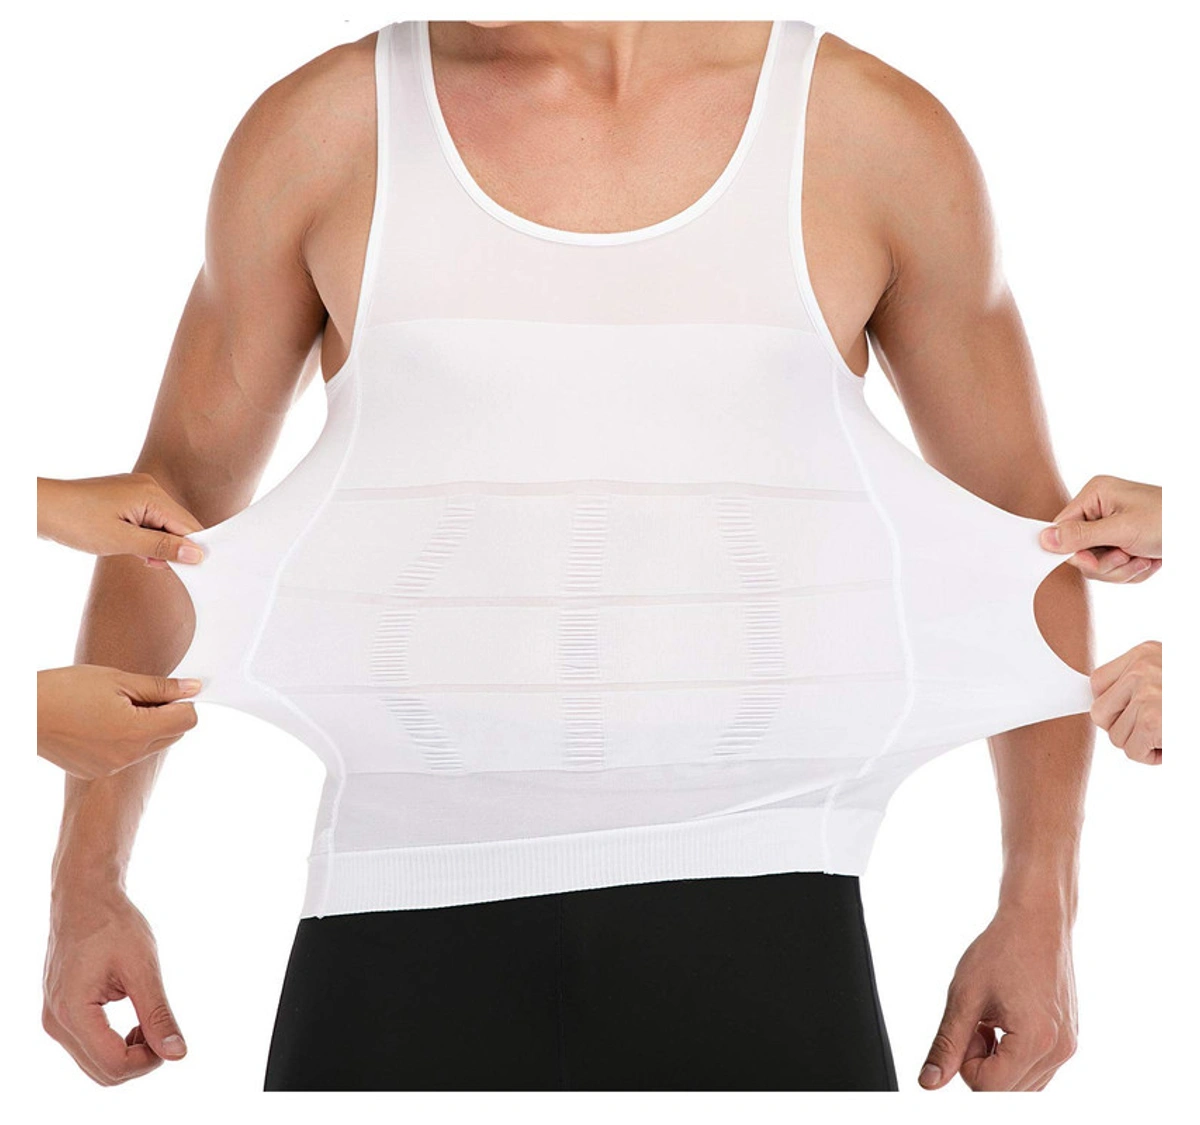 Buy Bstar Vest Slim n Lift Tummy Tucker Body Shaper for Men Size Small -  White at